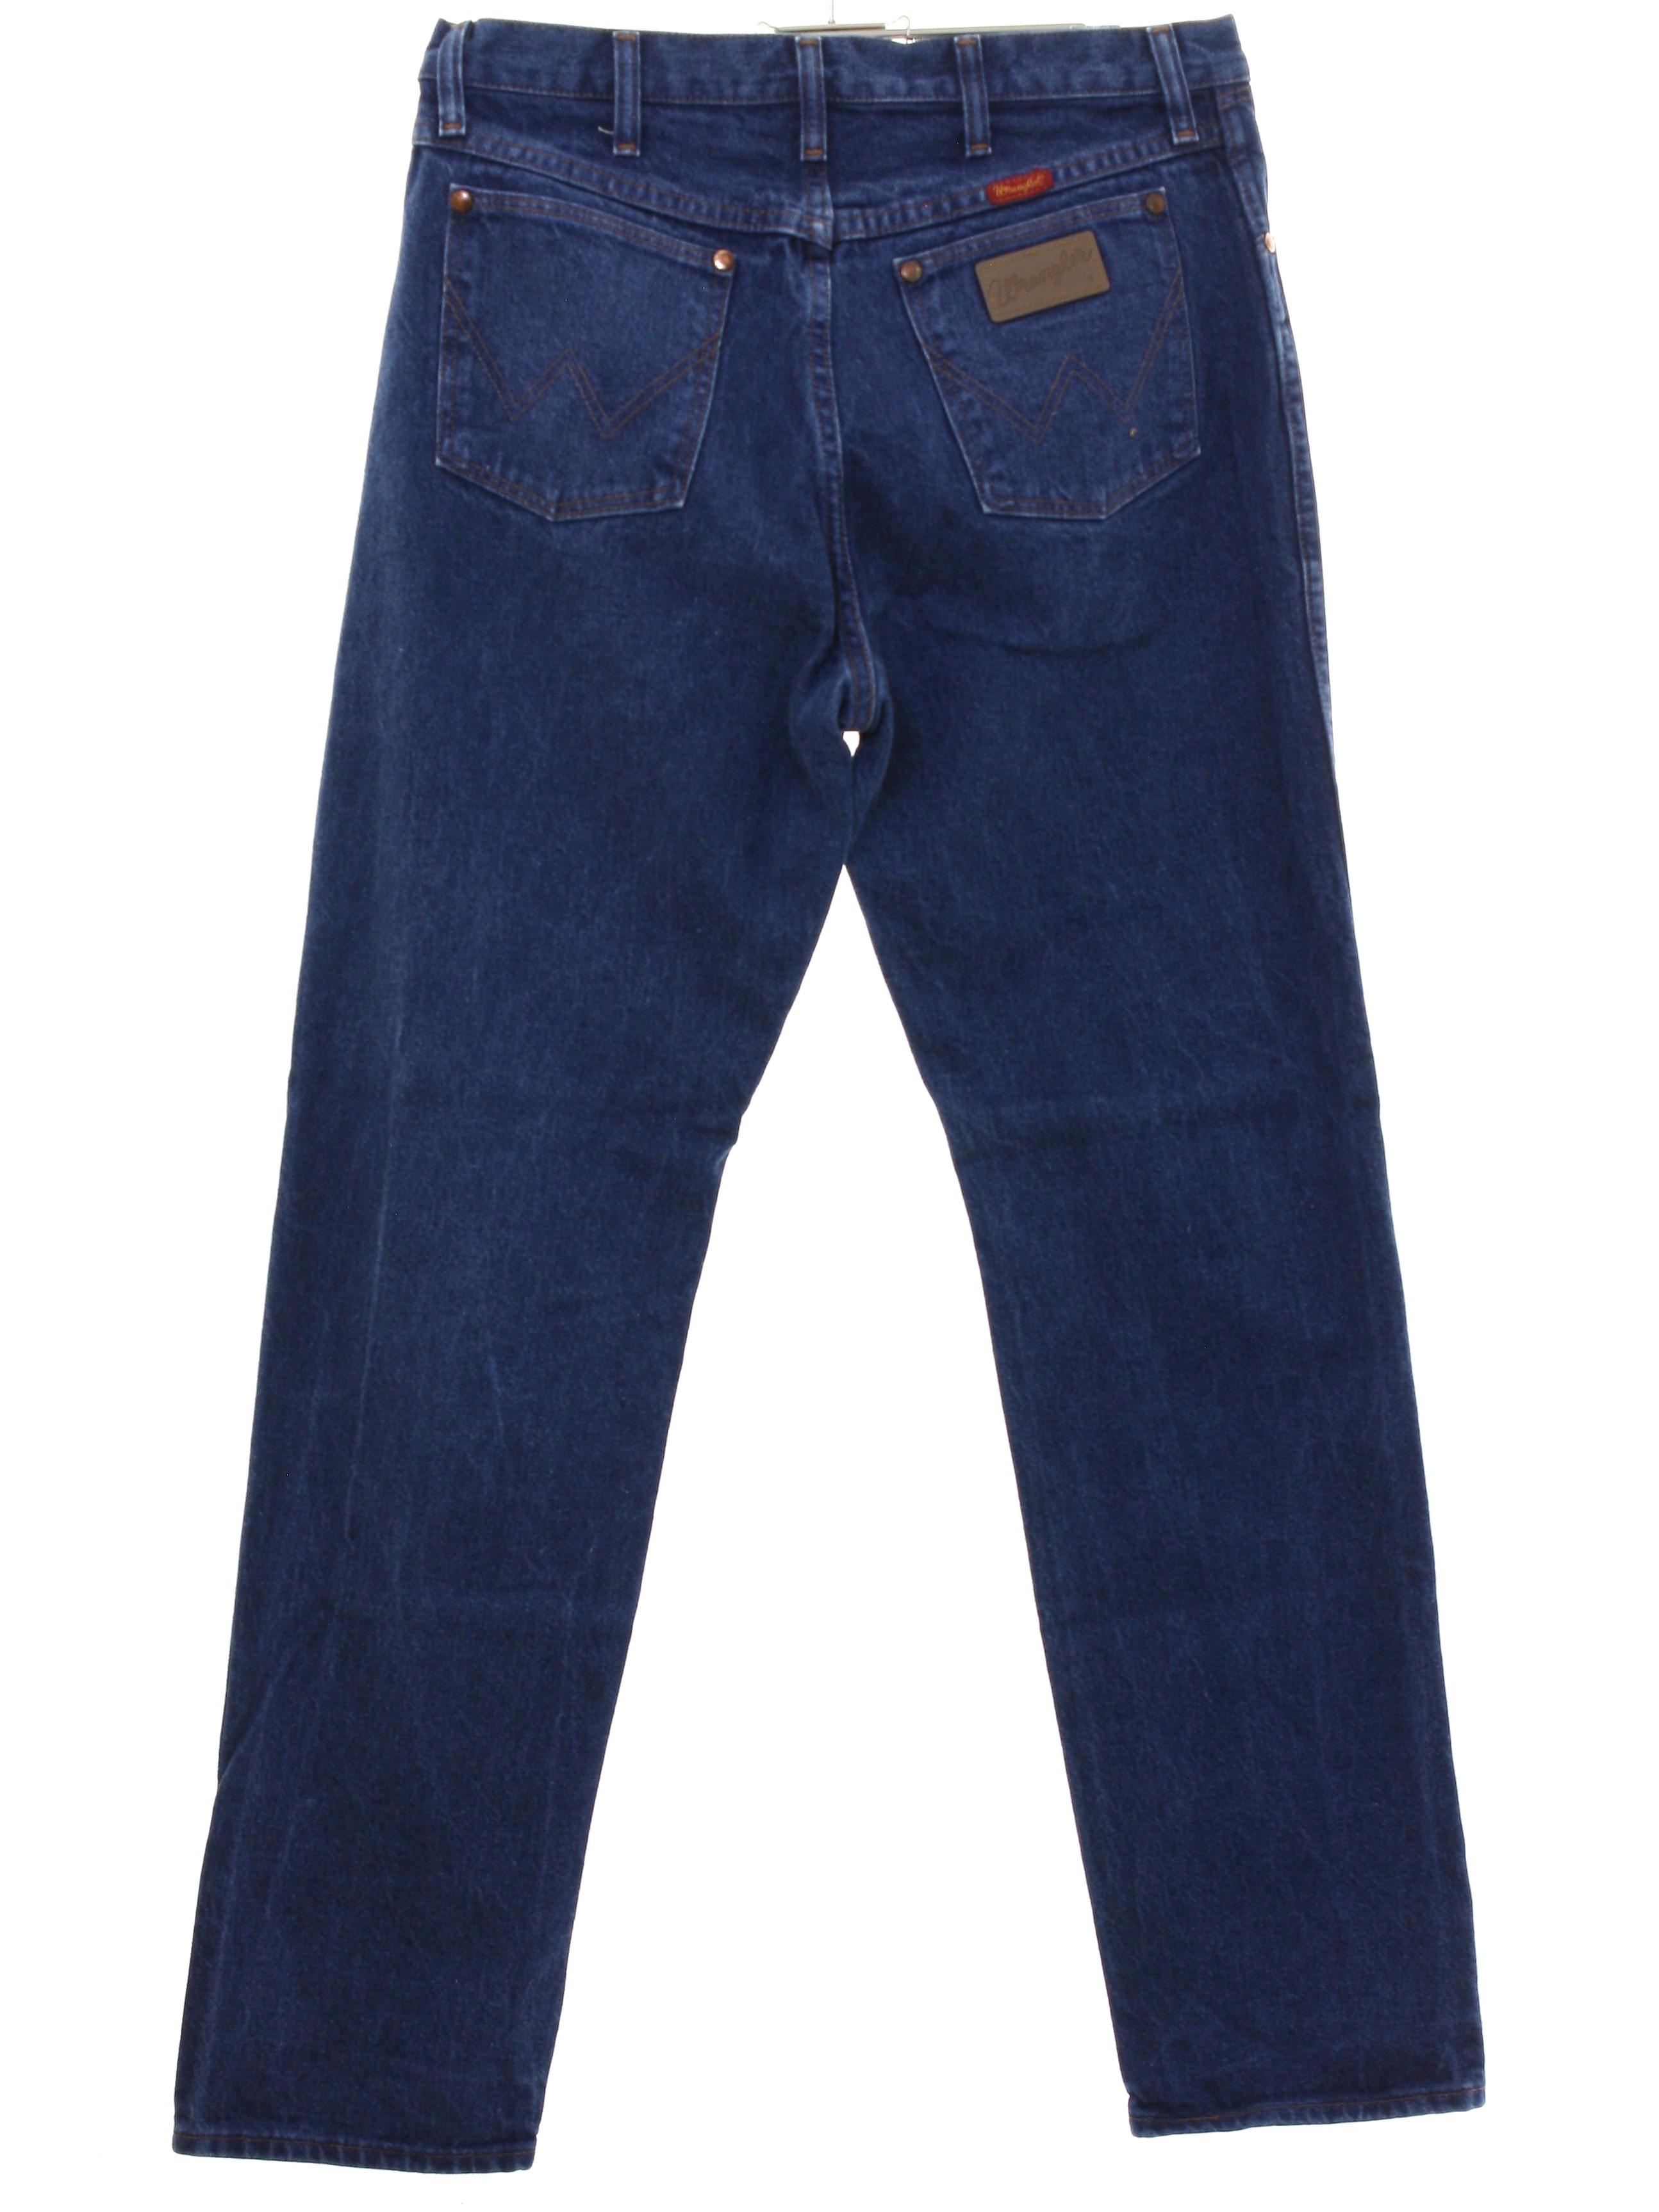 90s wrangler jeans